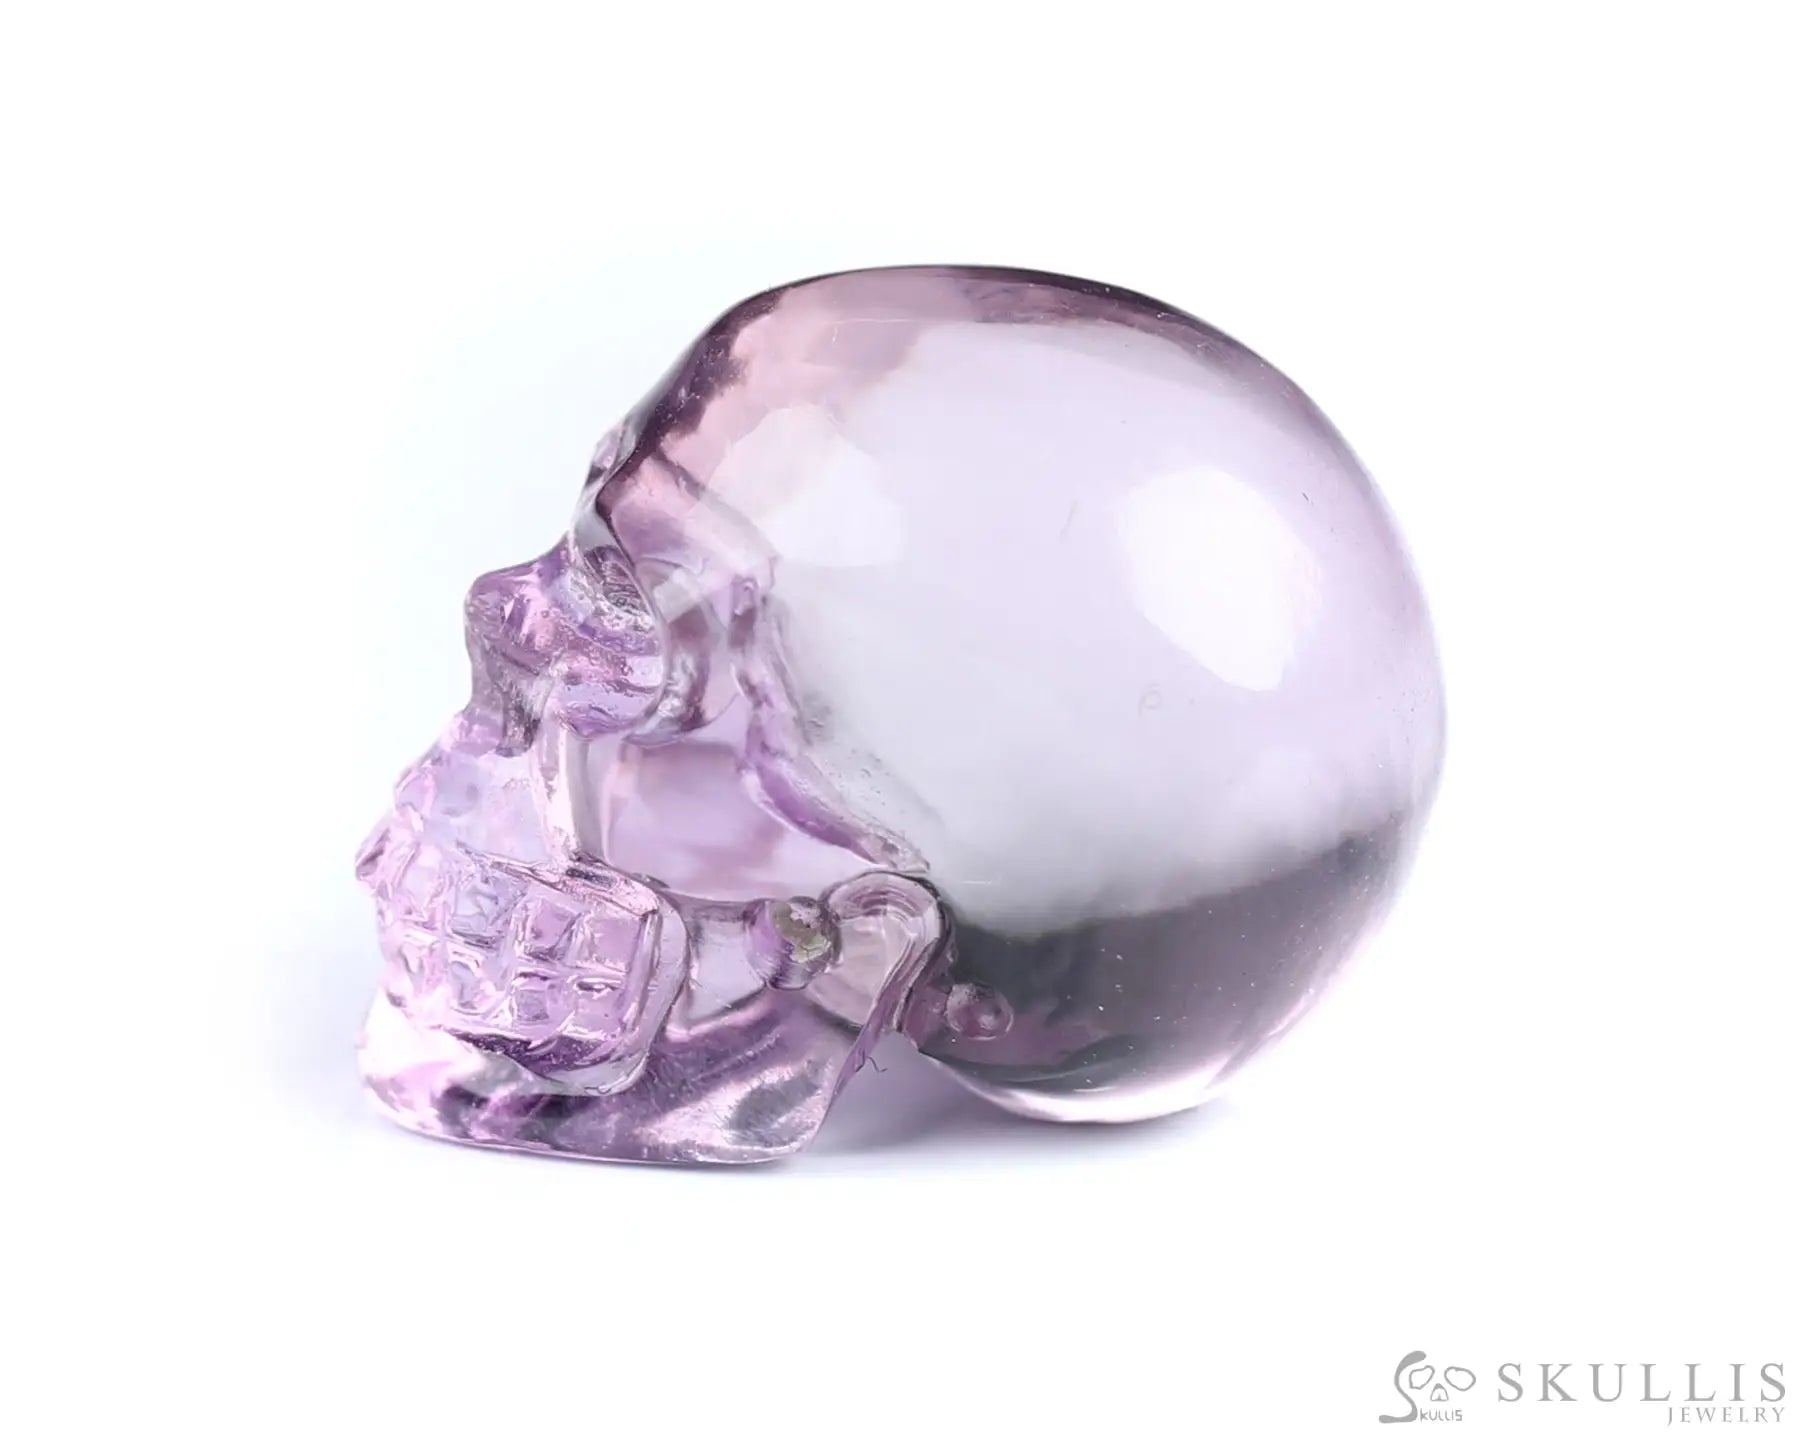 Gem Skull Of Amethyst Carved Realistic Tiny Gemstone